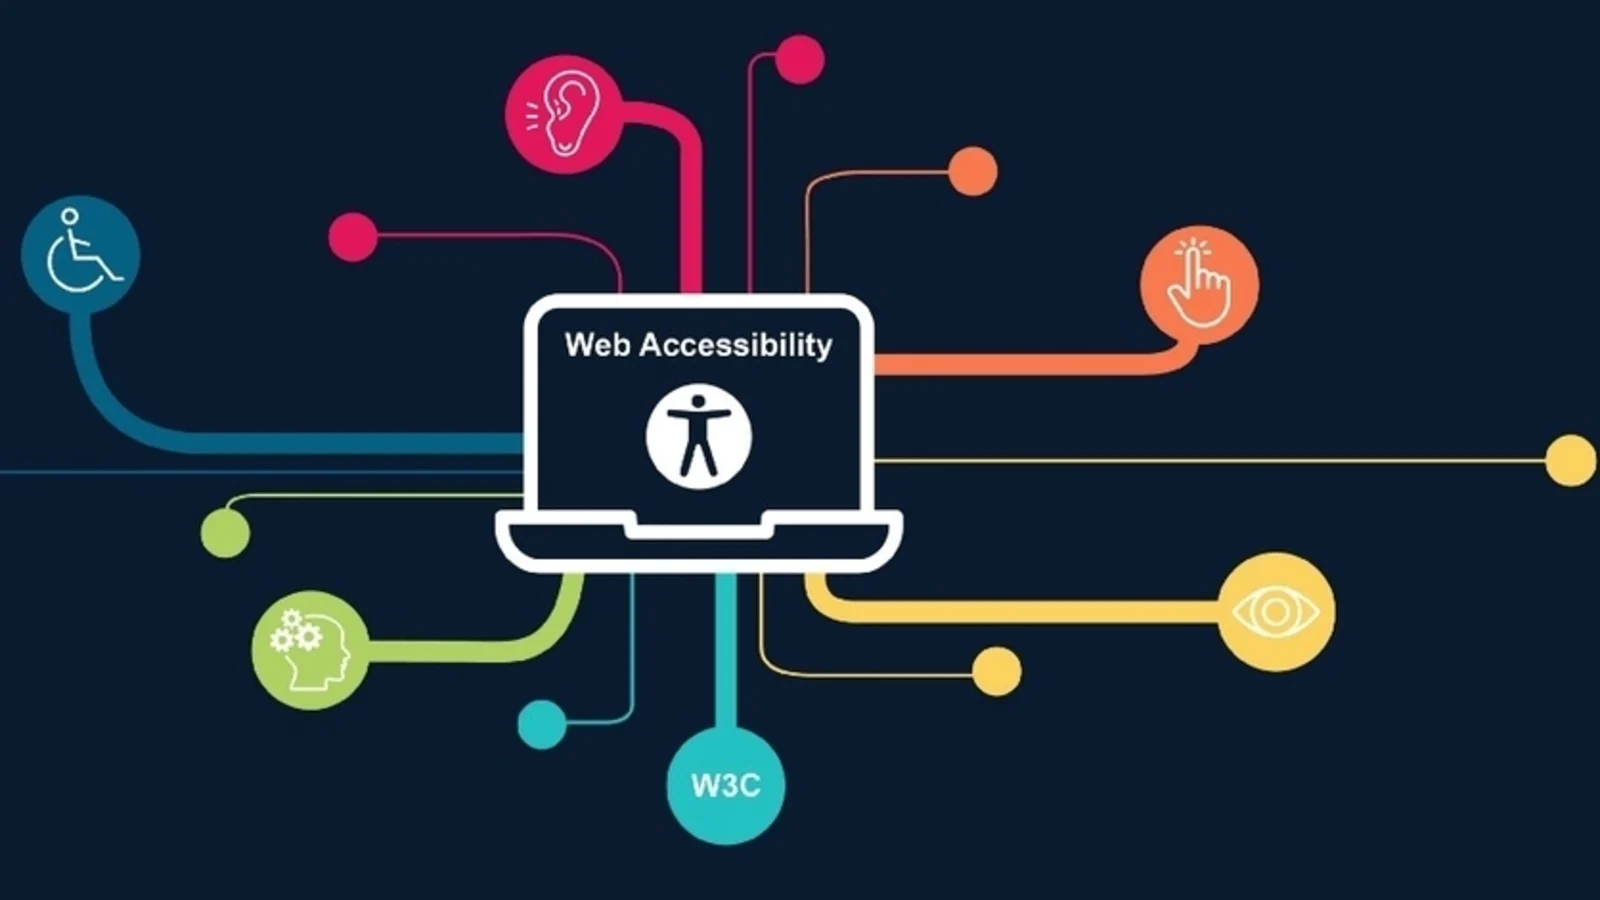 Web Accessibility